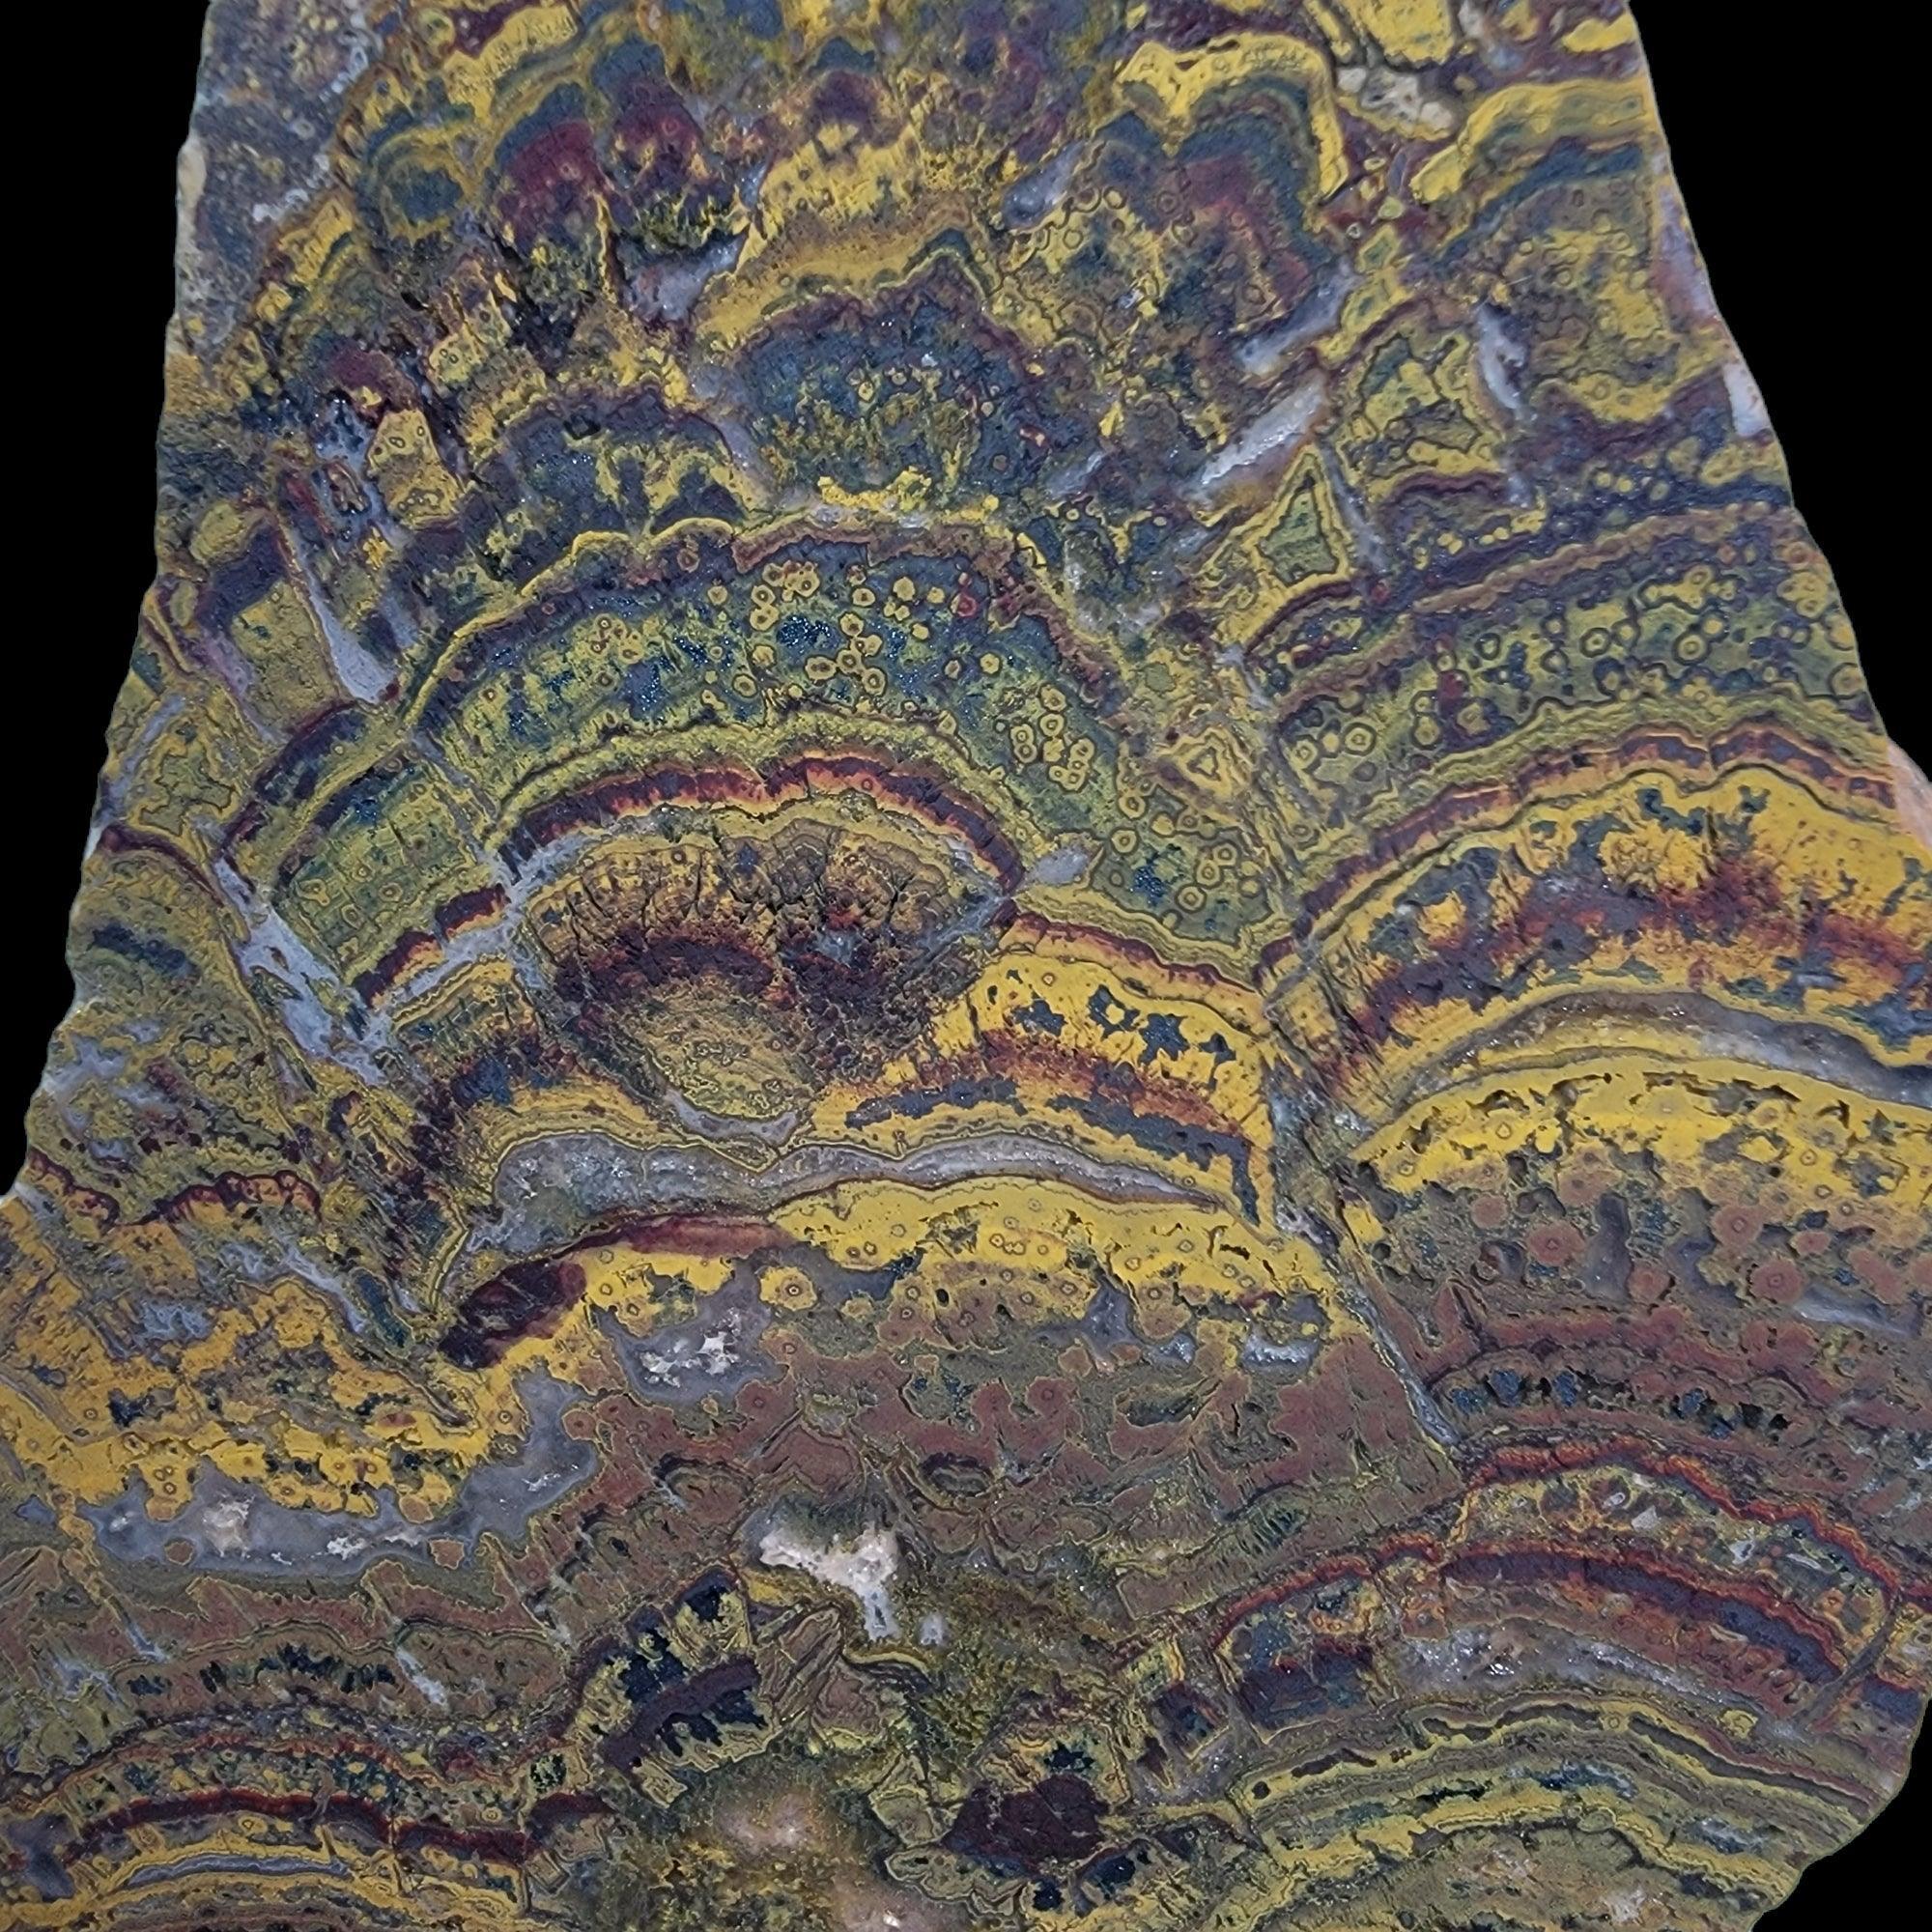 Apple Valley Jasper Slab!  Fossil Stromatolite!  Lapidary Slab! - LapidaryCentral